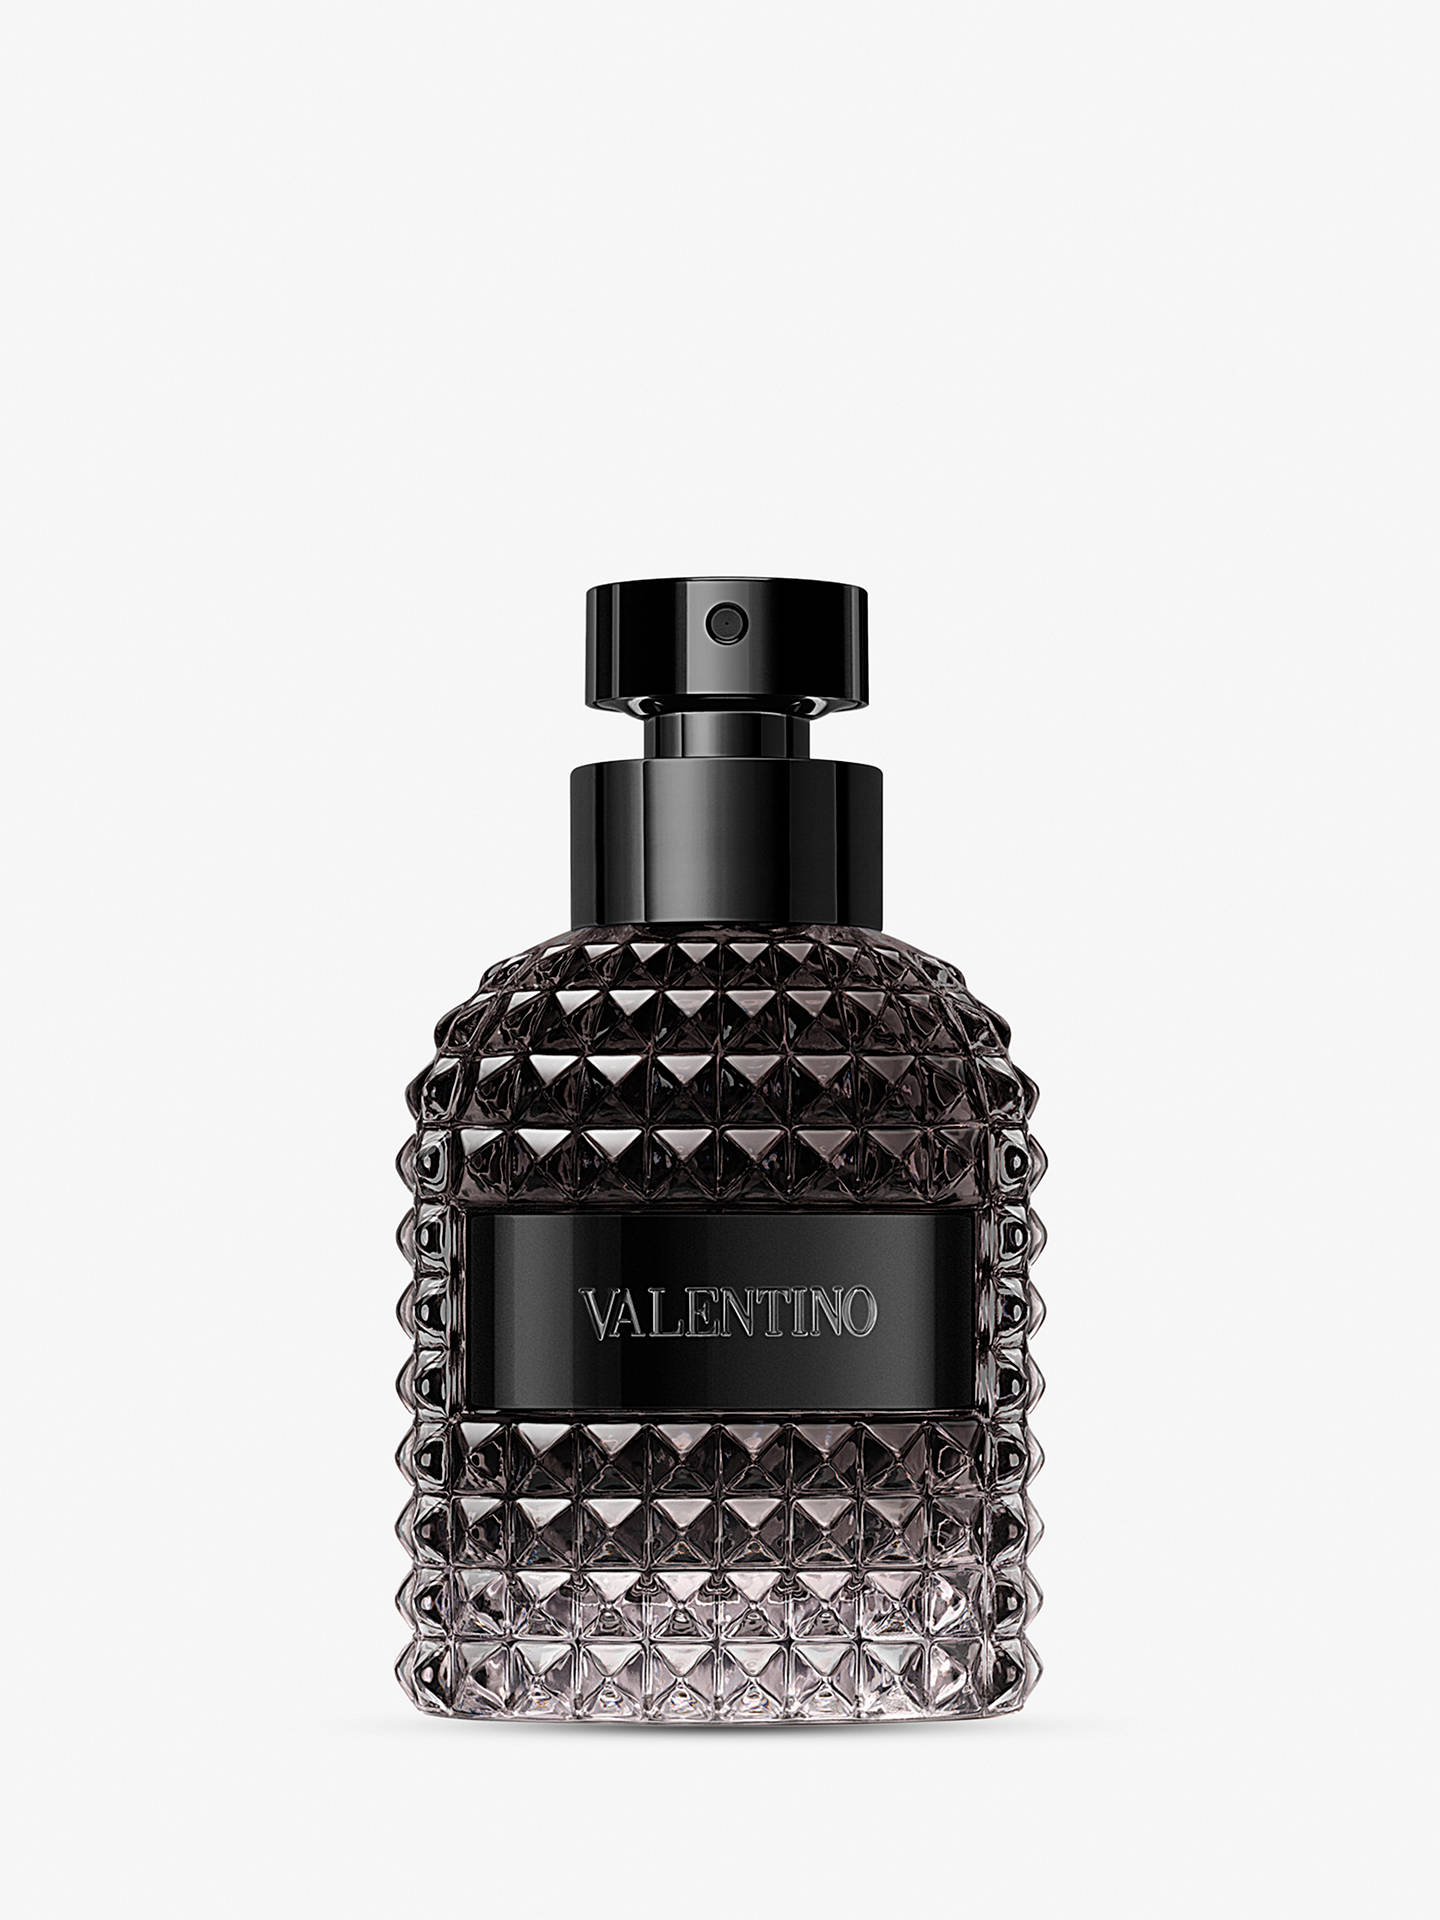 Valentino Uomo Eau de Parfum Intense at John Lewis & Partners